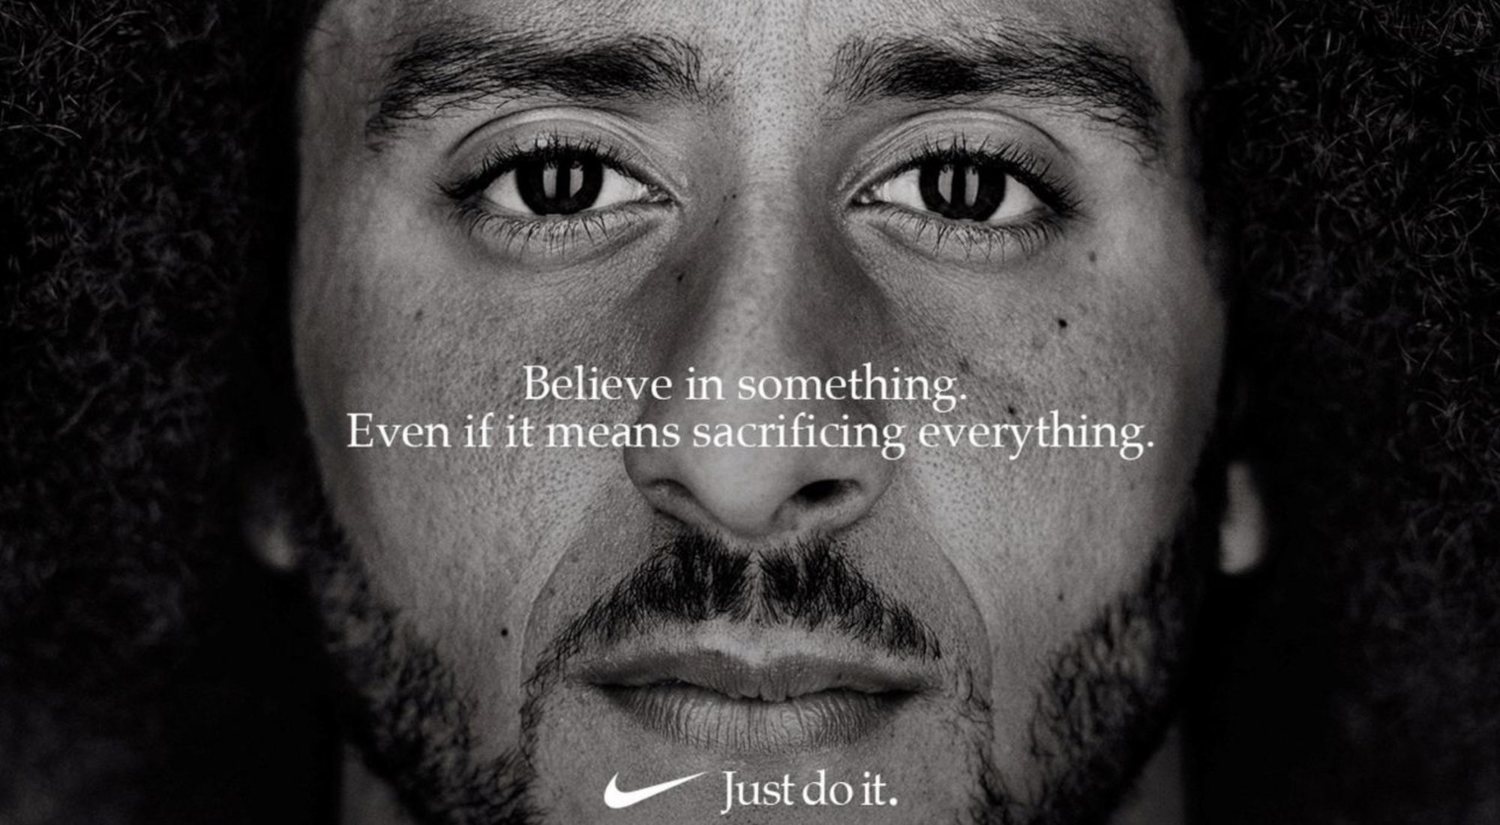 La controvertida campaña de Nike con Colin Kaepernick, explicada